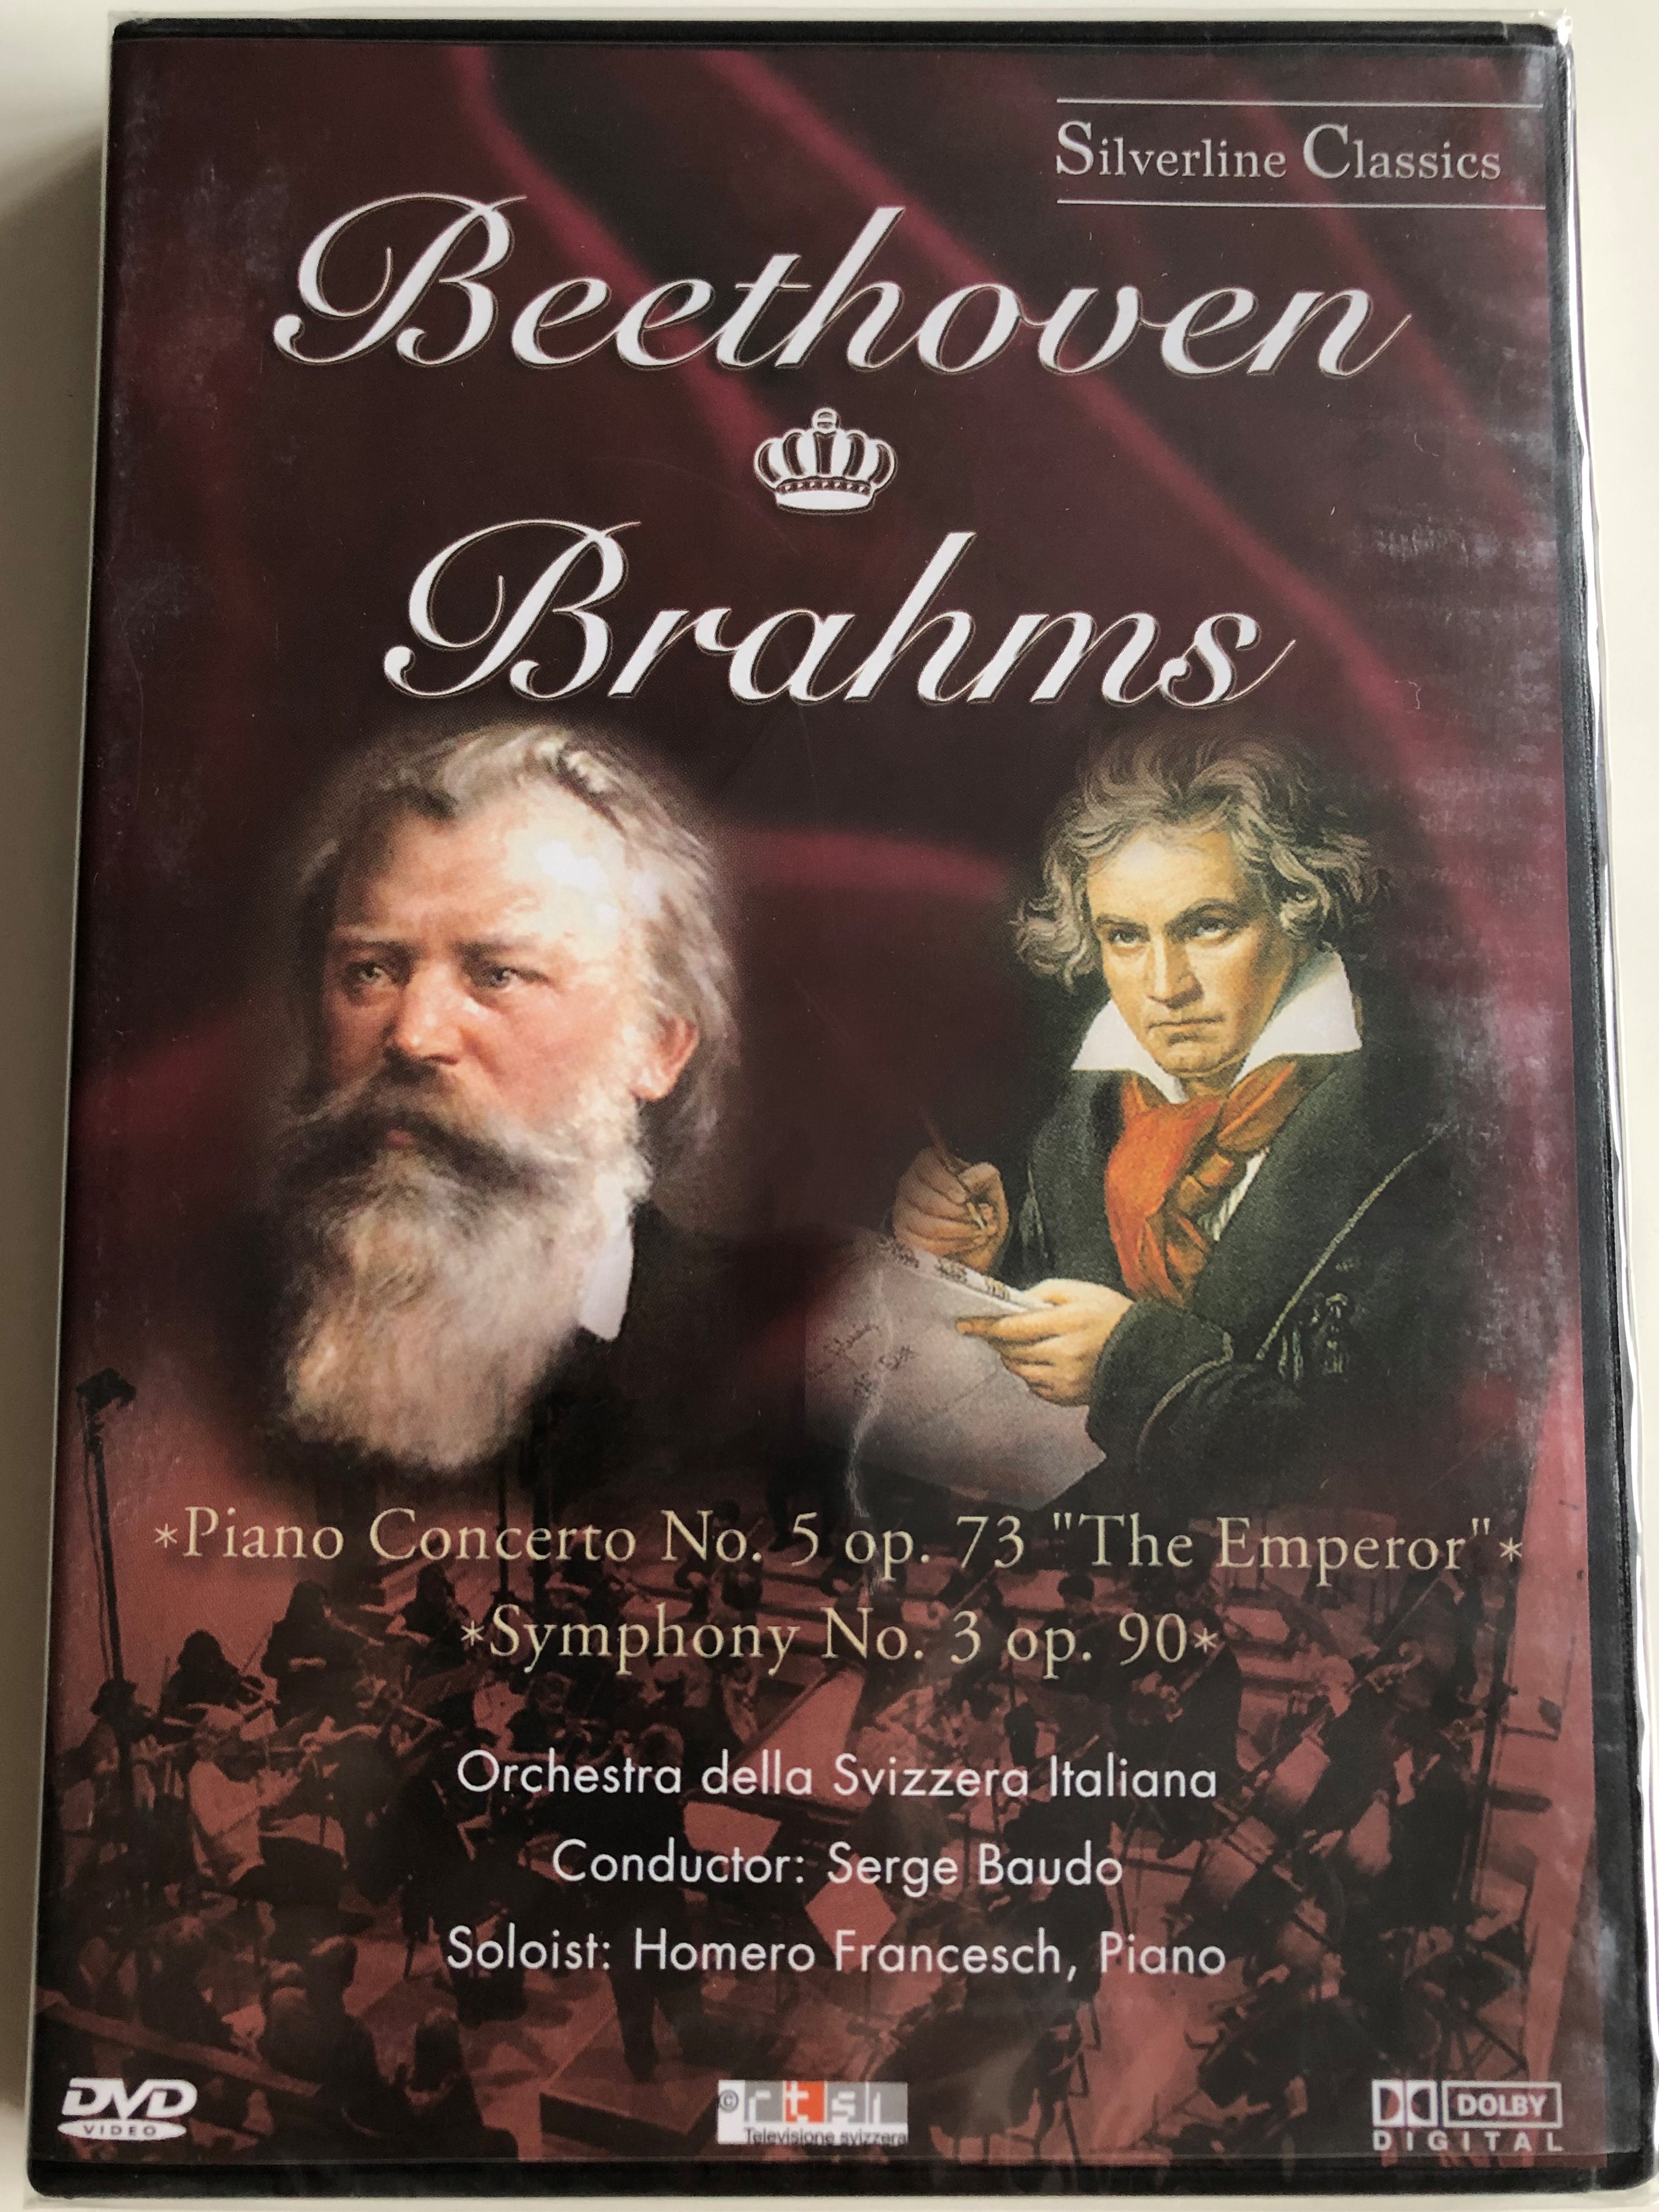 beethoven-brahms-piano-concerto-no.-5-op.-73-the-emperor-symphony-no.-3-op.-90-orchestra-della-svizzera-italiana-serge-baudo-homero-francesch-silverline-classics-cascade-medien-dvd-2003-1-.jpg